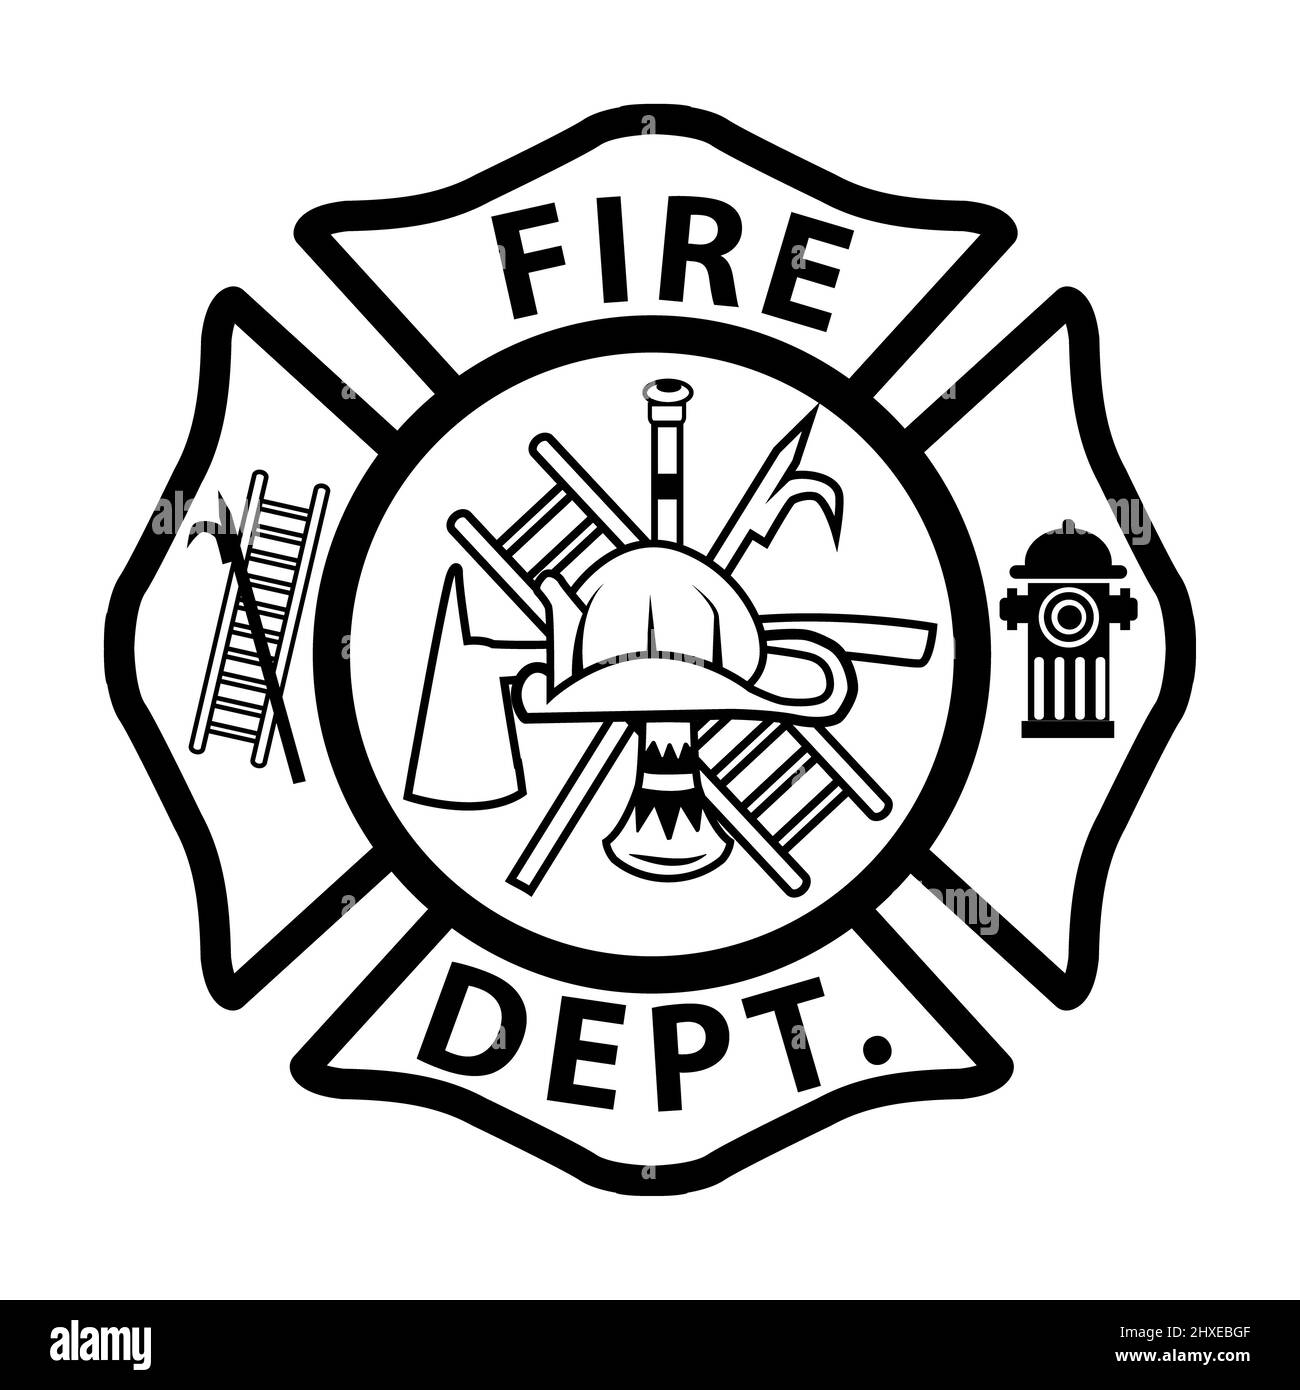 fireman emblem sign on white background. firefighter’s st florian maltese cross. fire department symbol. Stock Photo